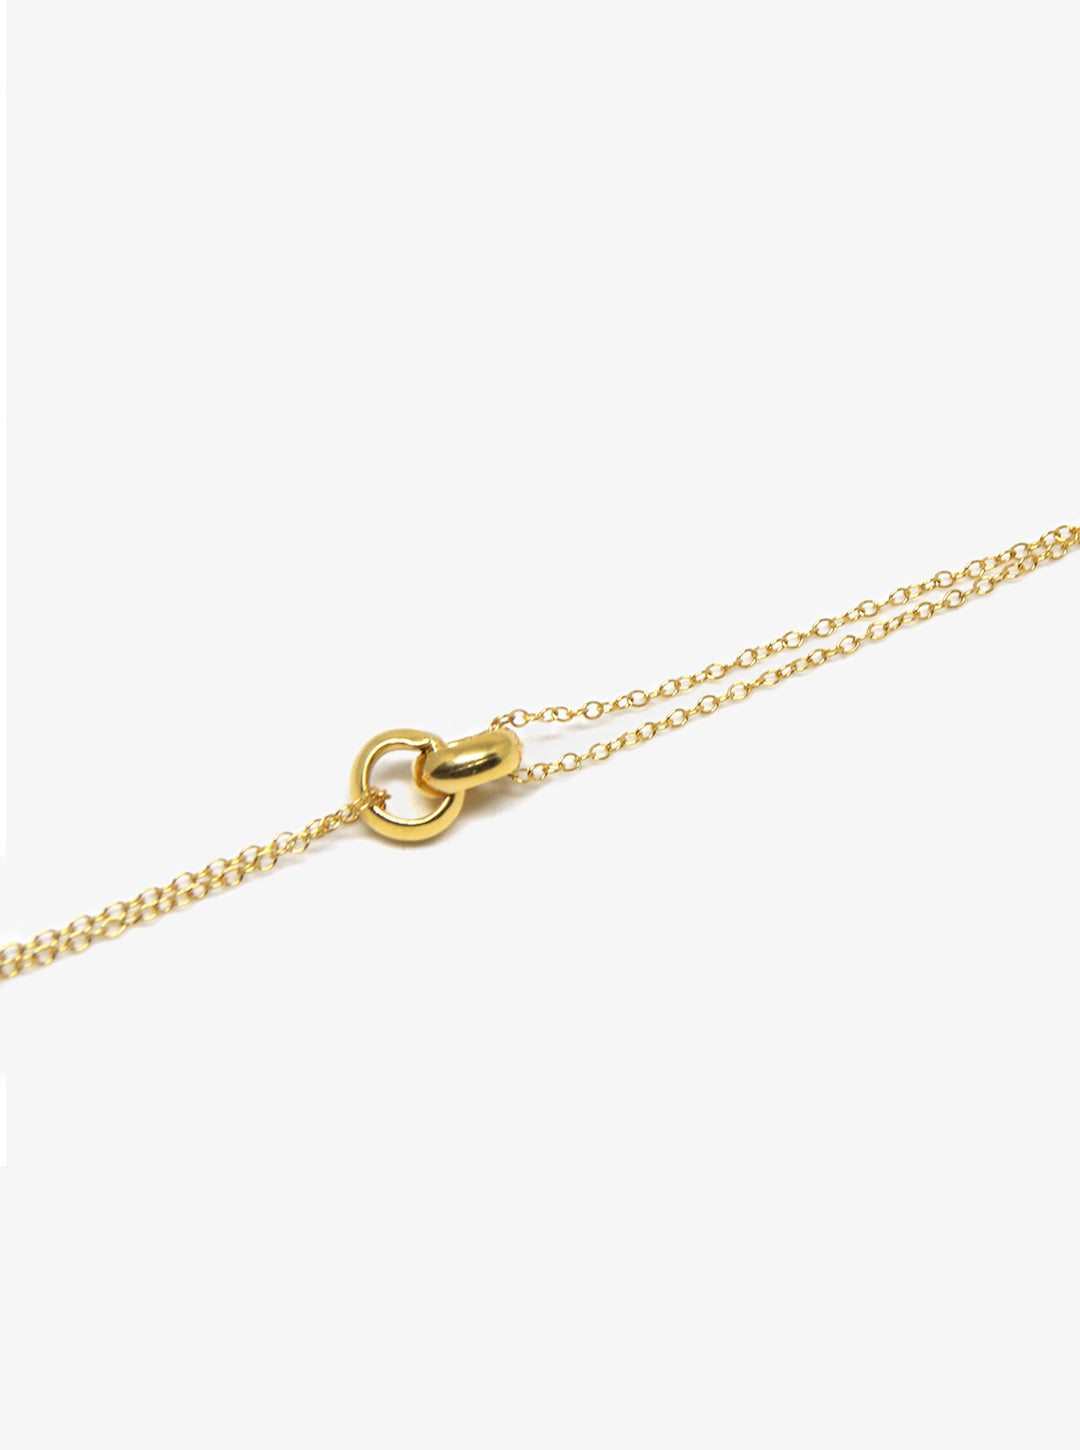 llayers-mens-women-jewelry-gold-chain-bracelet-infinity-newyork-brooklyn-F2